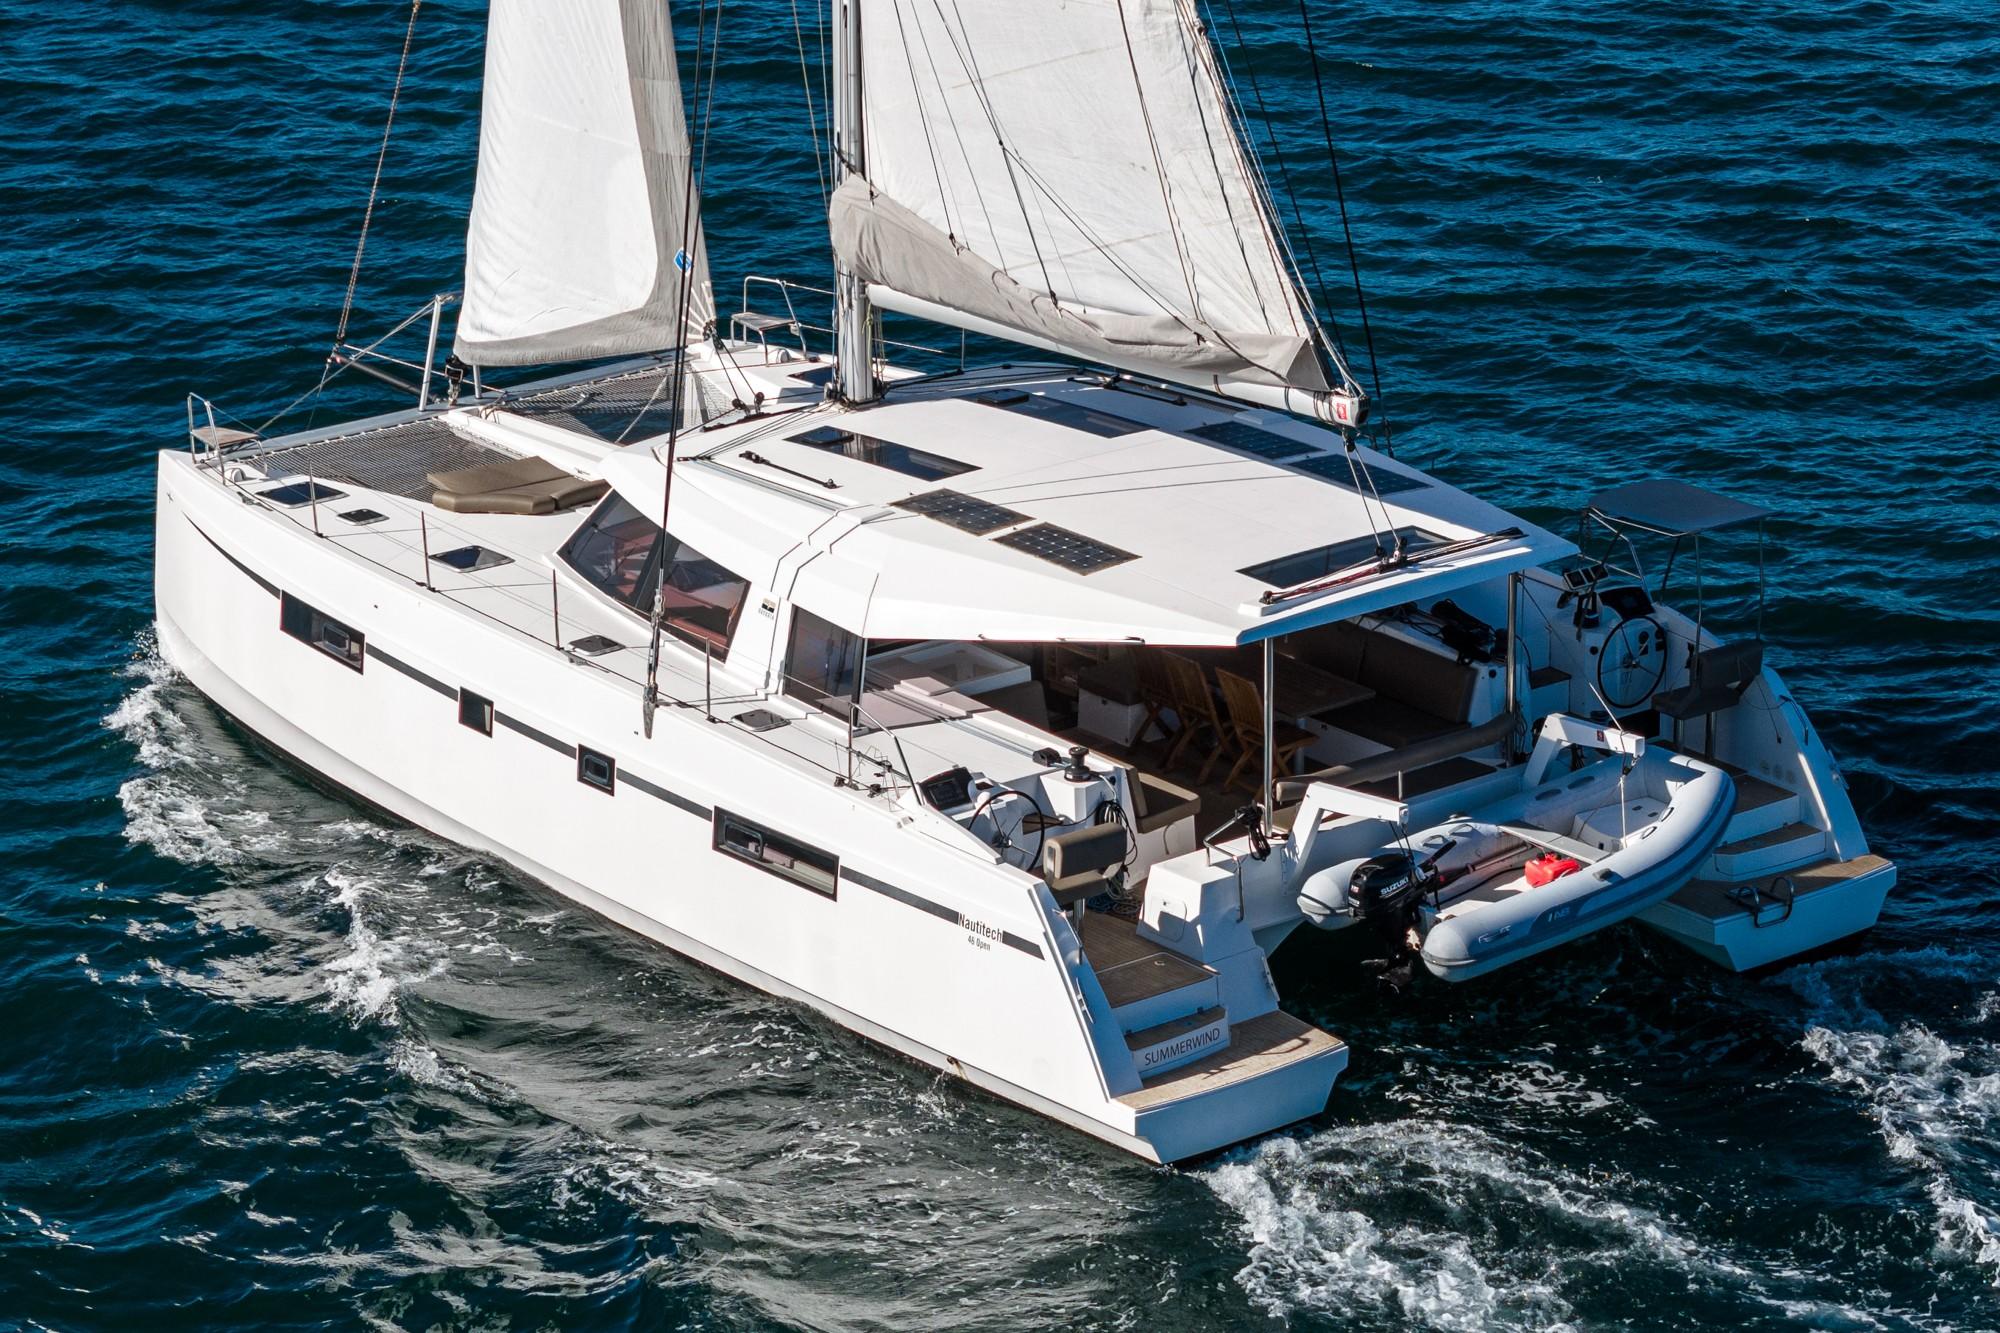 Summerwind Yacht for Sale, 46 Nautitech Yachts San Diego, CA